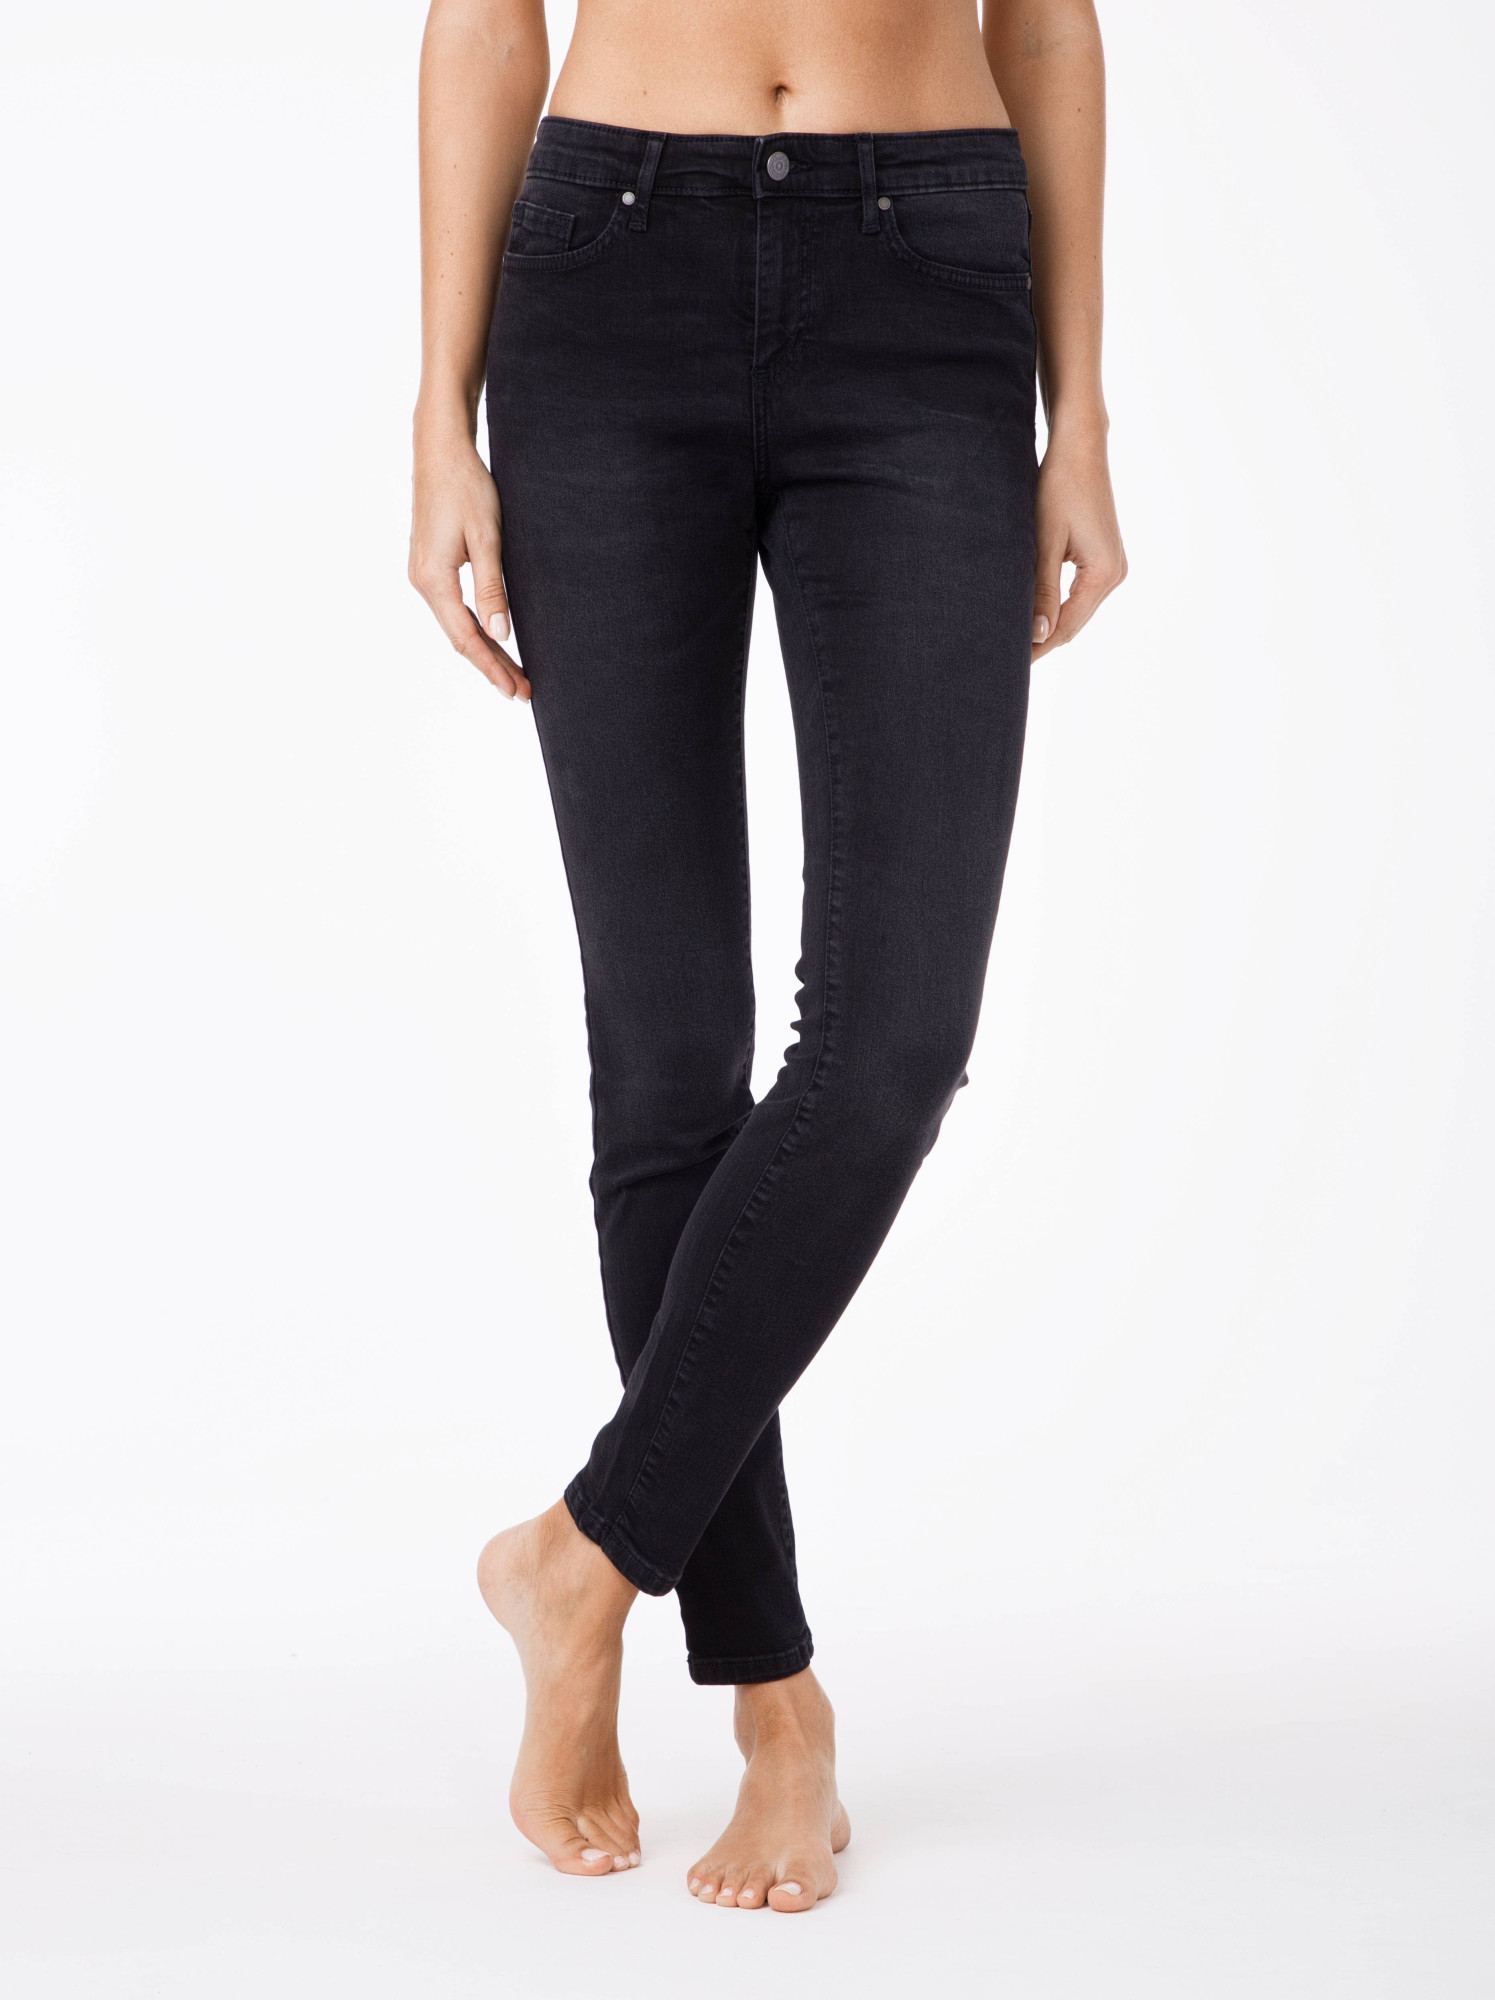 CONTE Jeans Black 170-98/M